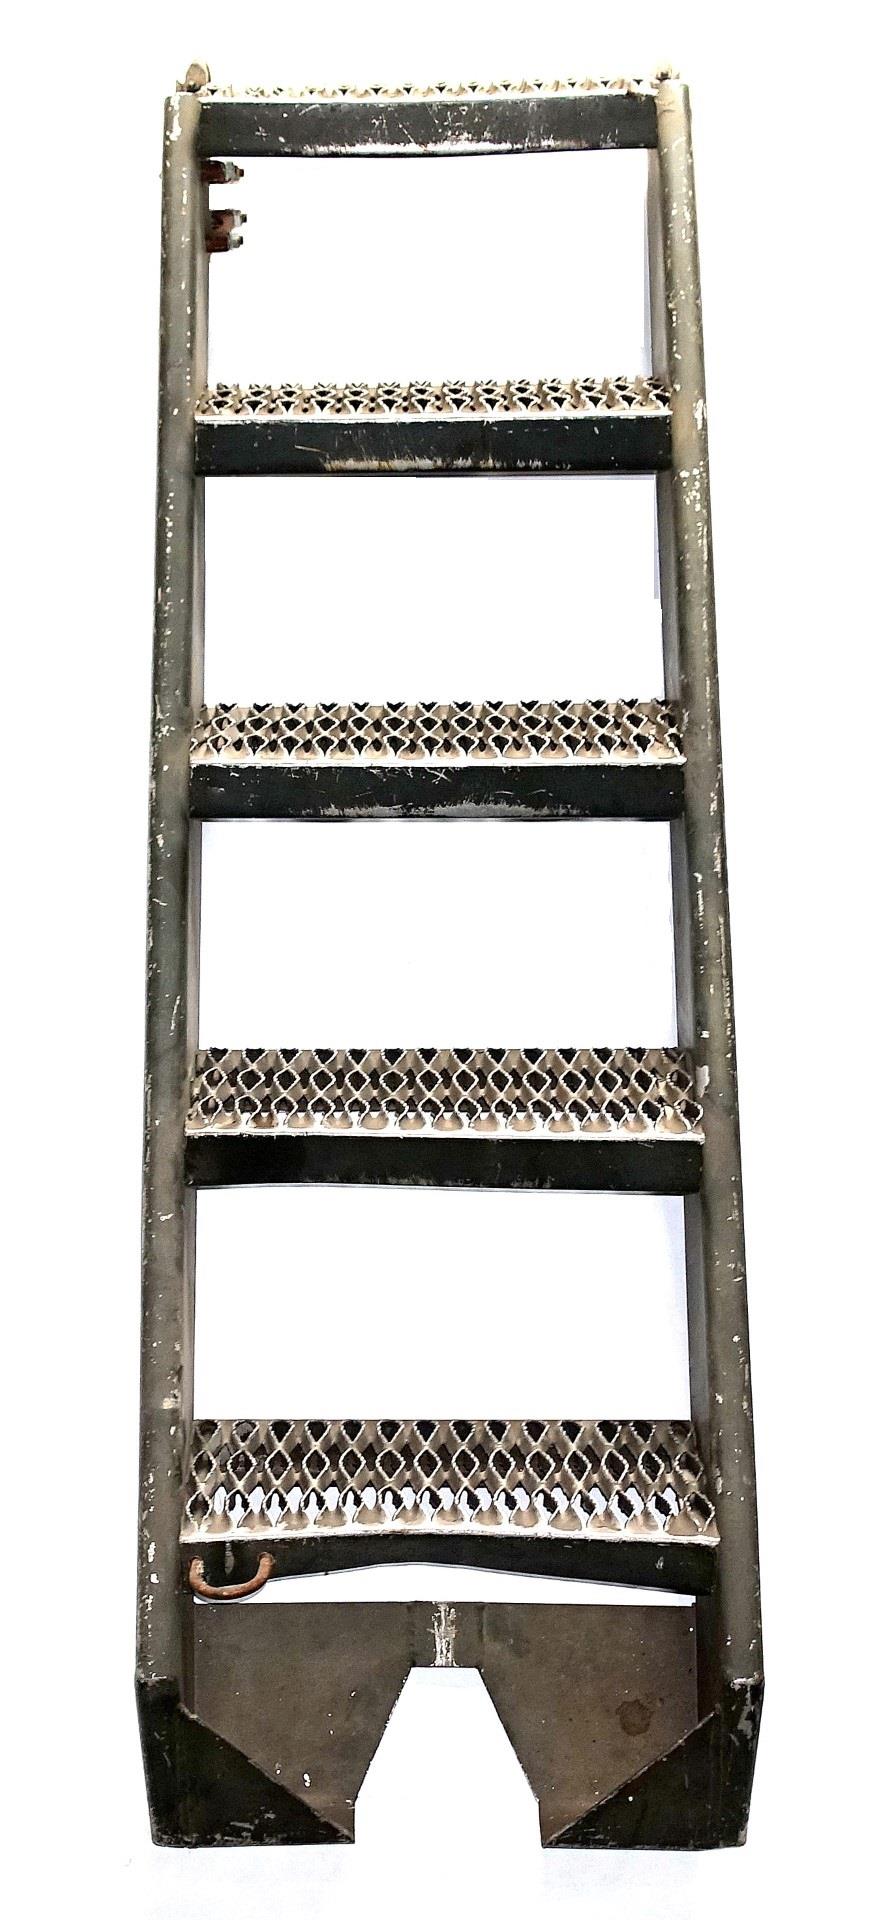 ALL-5213 | ALL-5213 5-Step Boarding Ladder (2) (Large).JPG